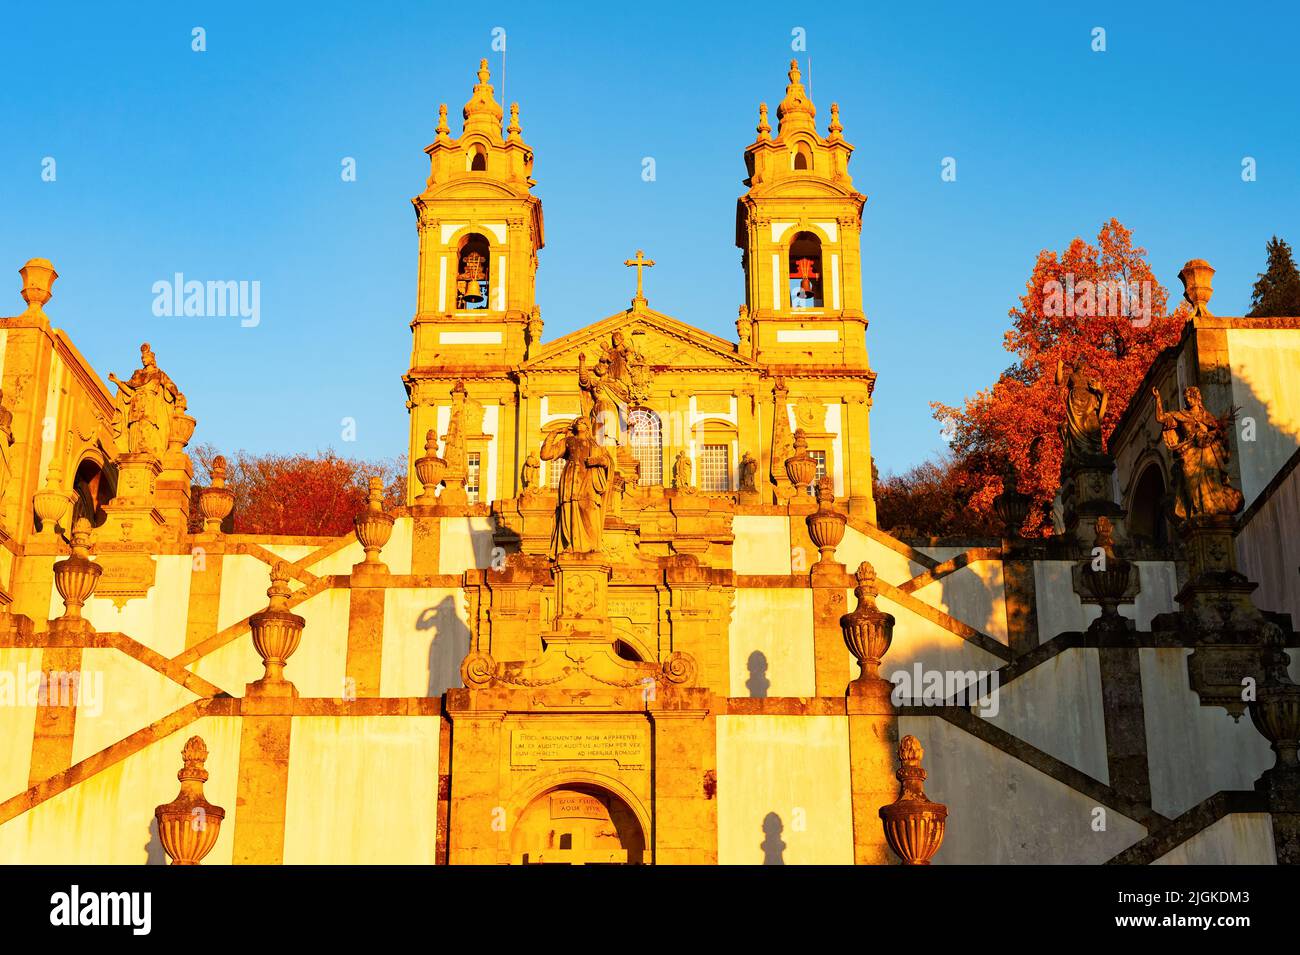 Bom Jesus do monte, iglesia barroca vista puesta del sol, Braga, Portugal Foto de stock